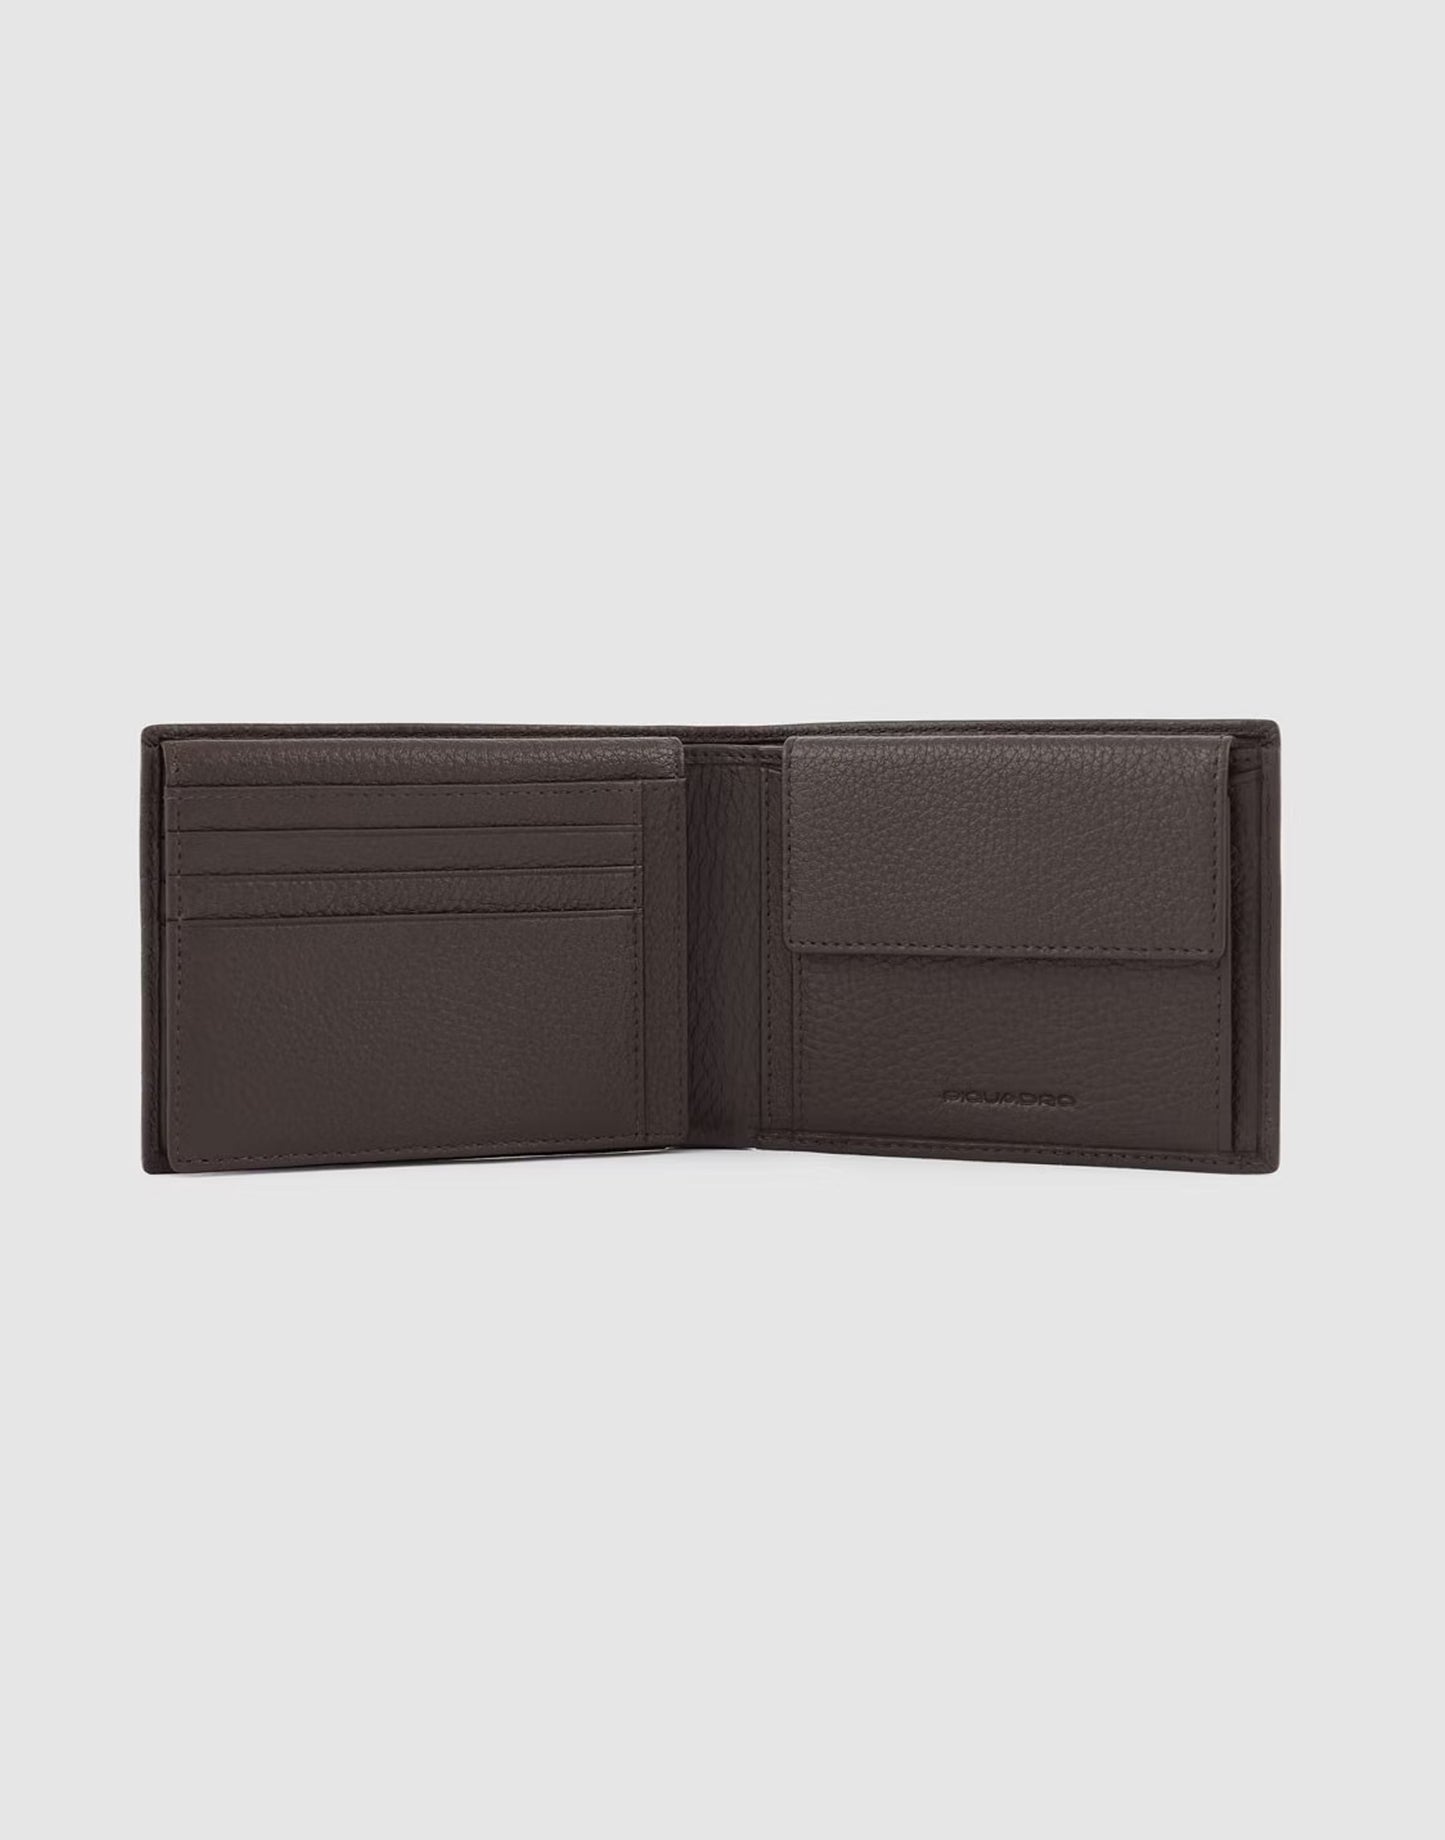 Piquadro wallet